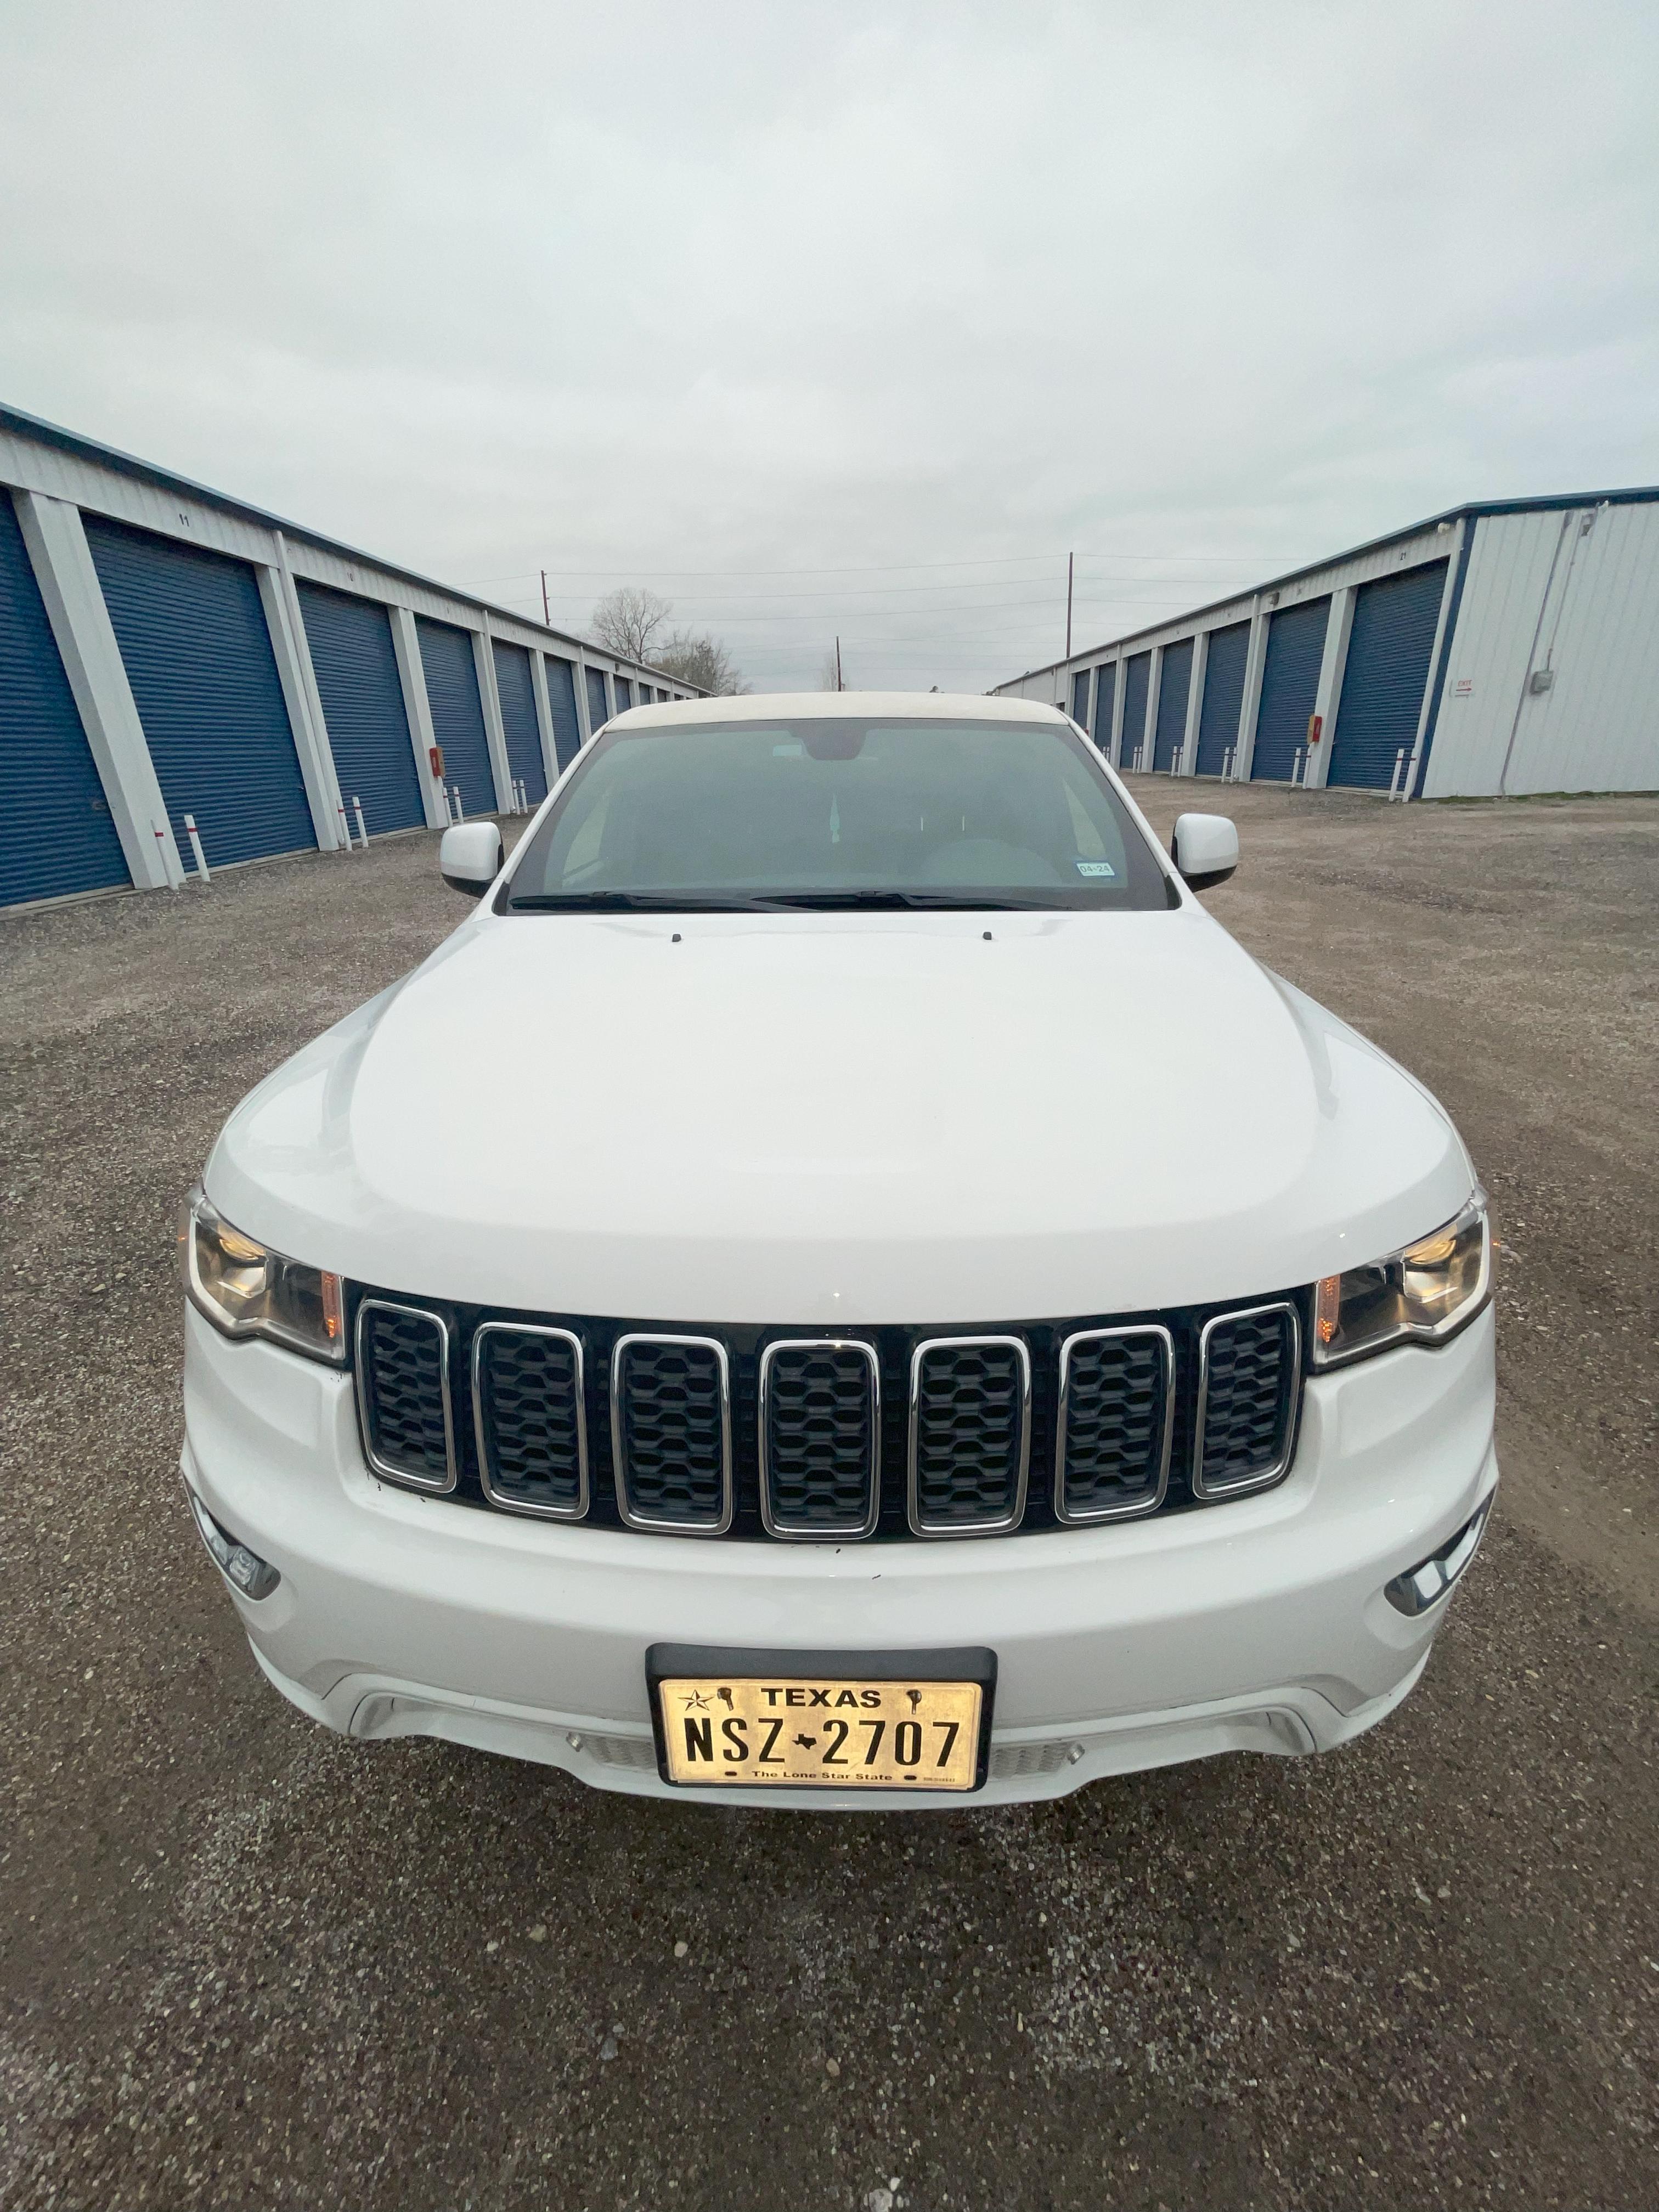 LOCATION PORTER, TX; 2017 Fiat Chrysler Auto Jeep Cherokee 5-Door Limousine, VIN# 1C4RJFAG5HC683939,